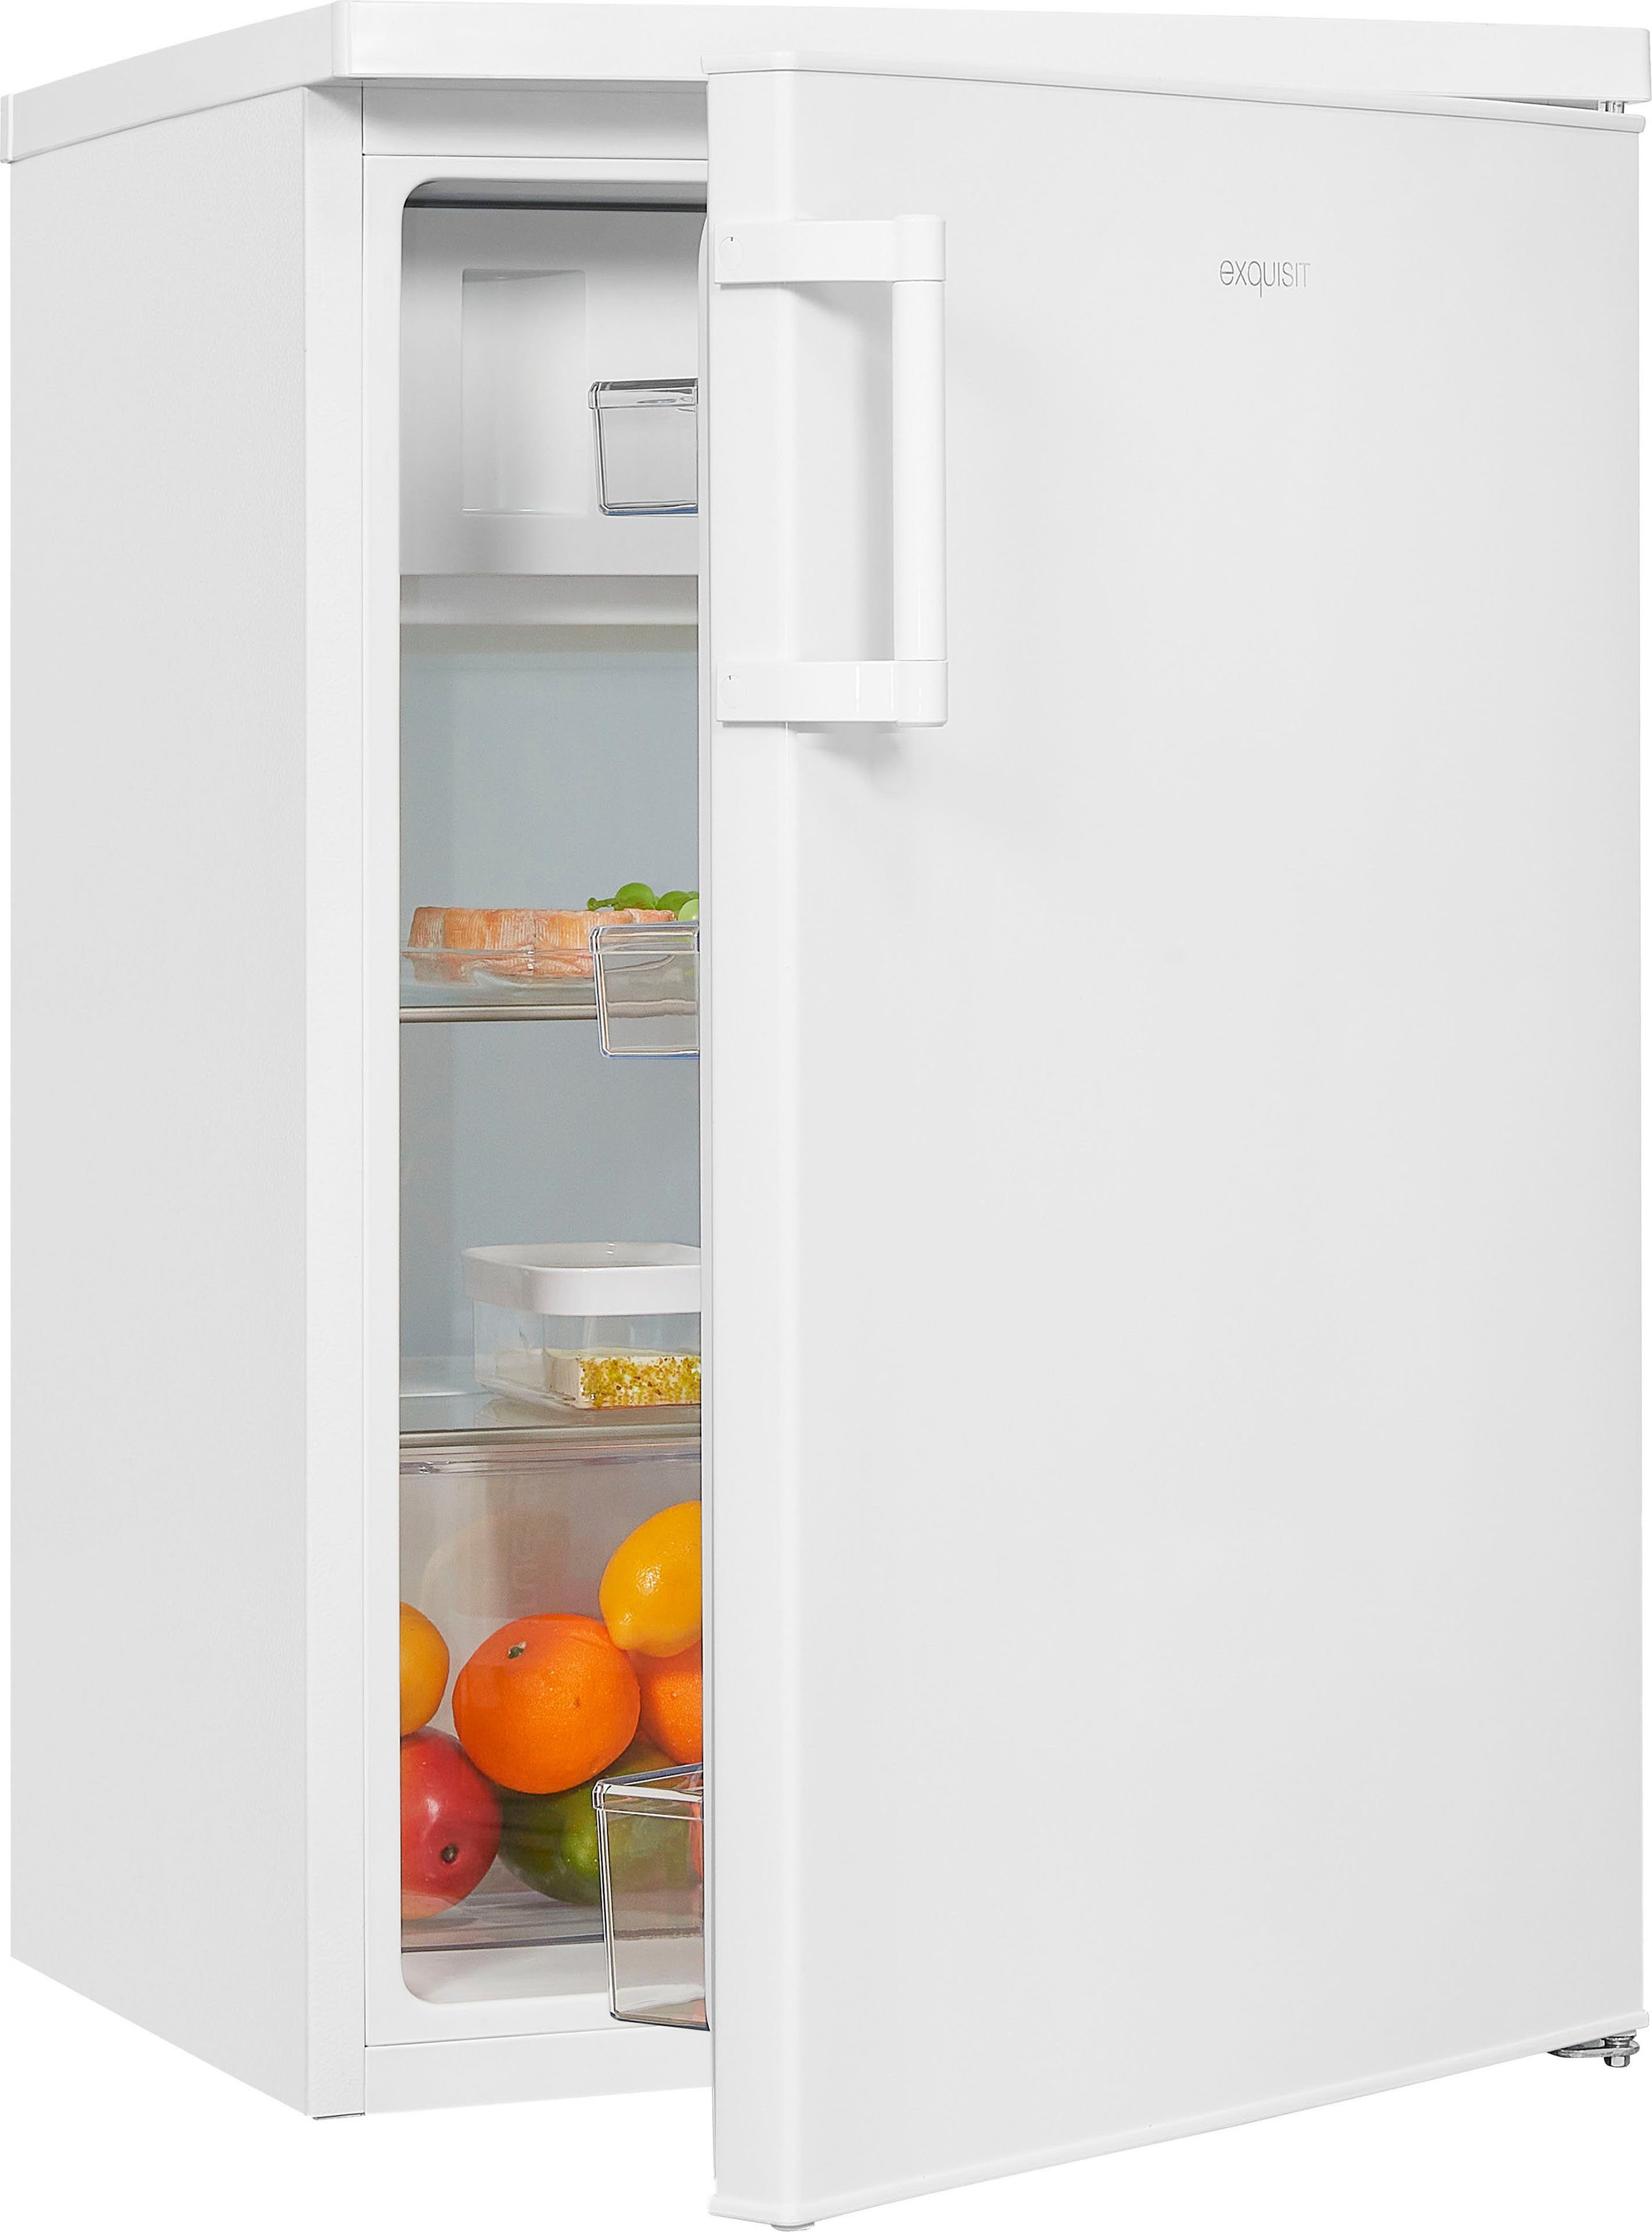 exquisit Kühlschrank KS16-4-H-010E weiss, 85 cm hoch, 56 cm breit | Kühlschränke